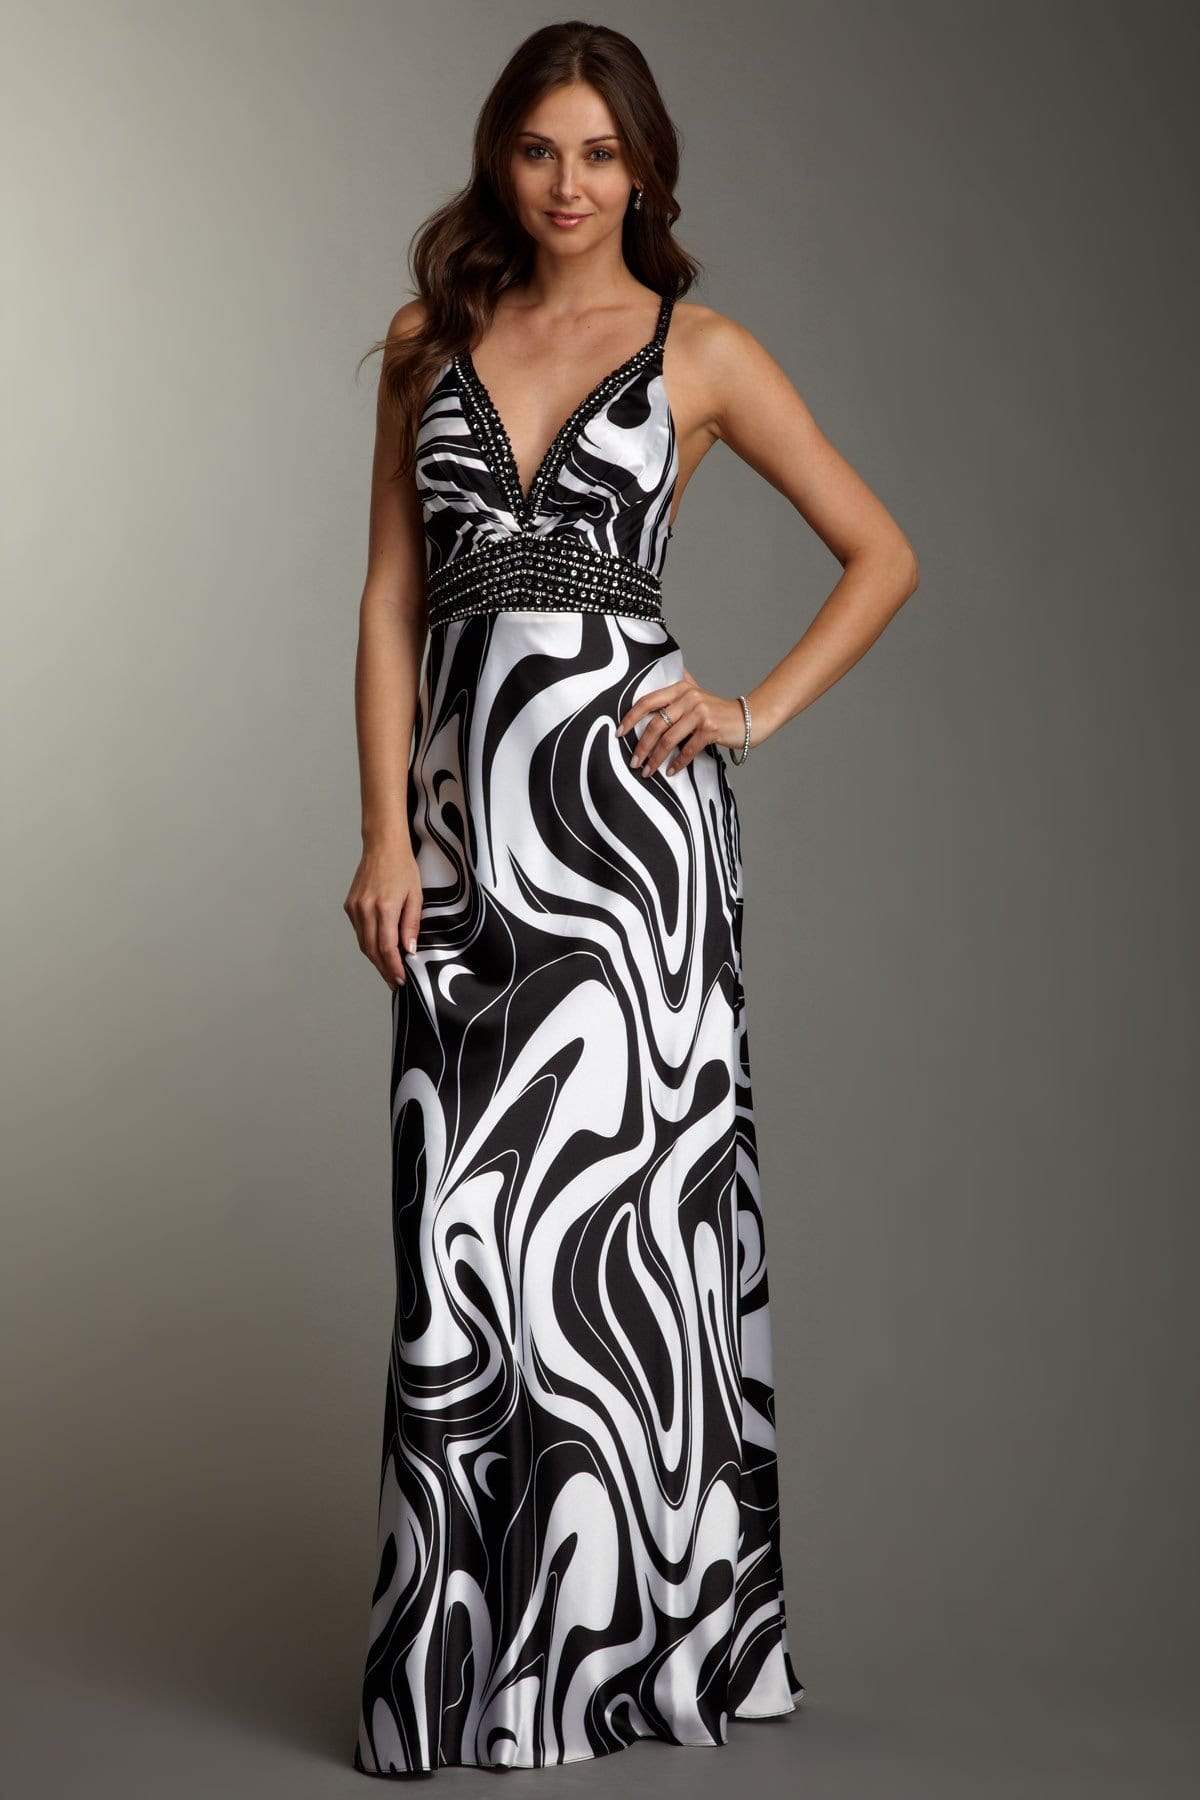 La Femme - 14186 Elegant Sleek Long Dress with Criss Cross Back
